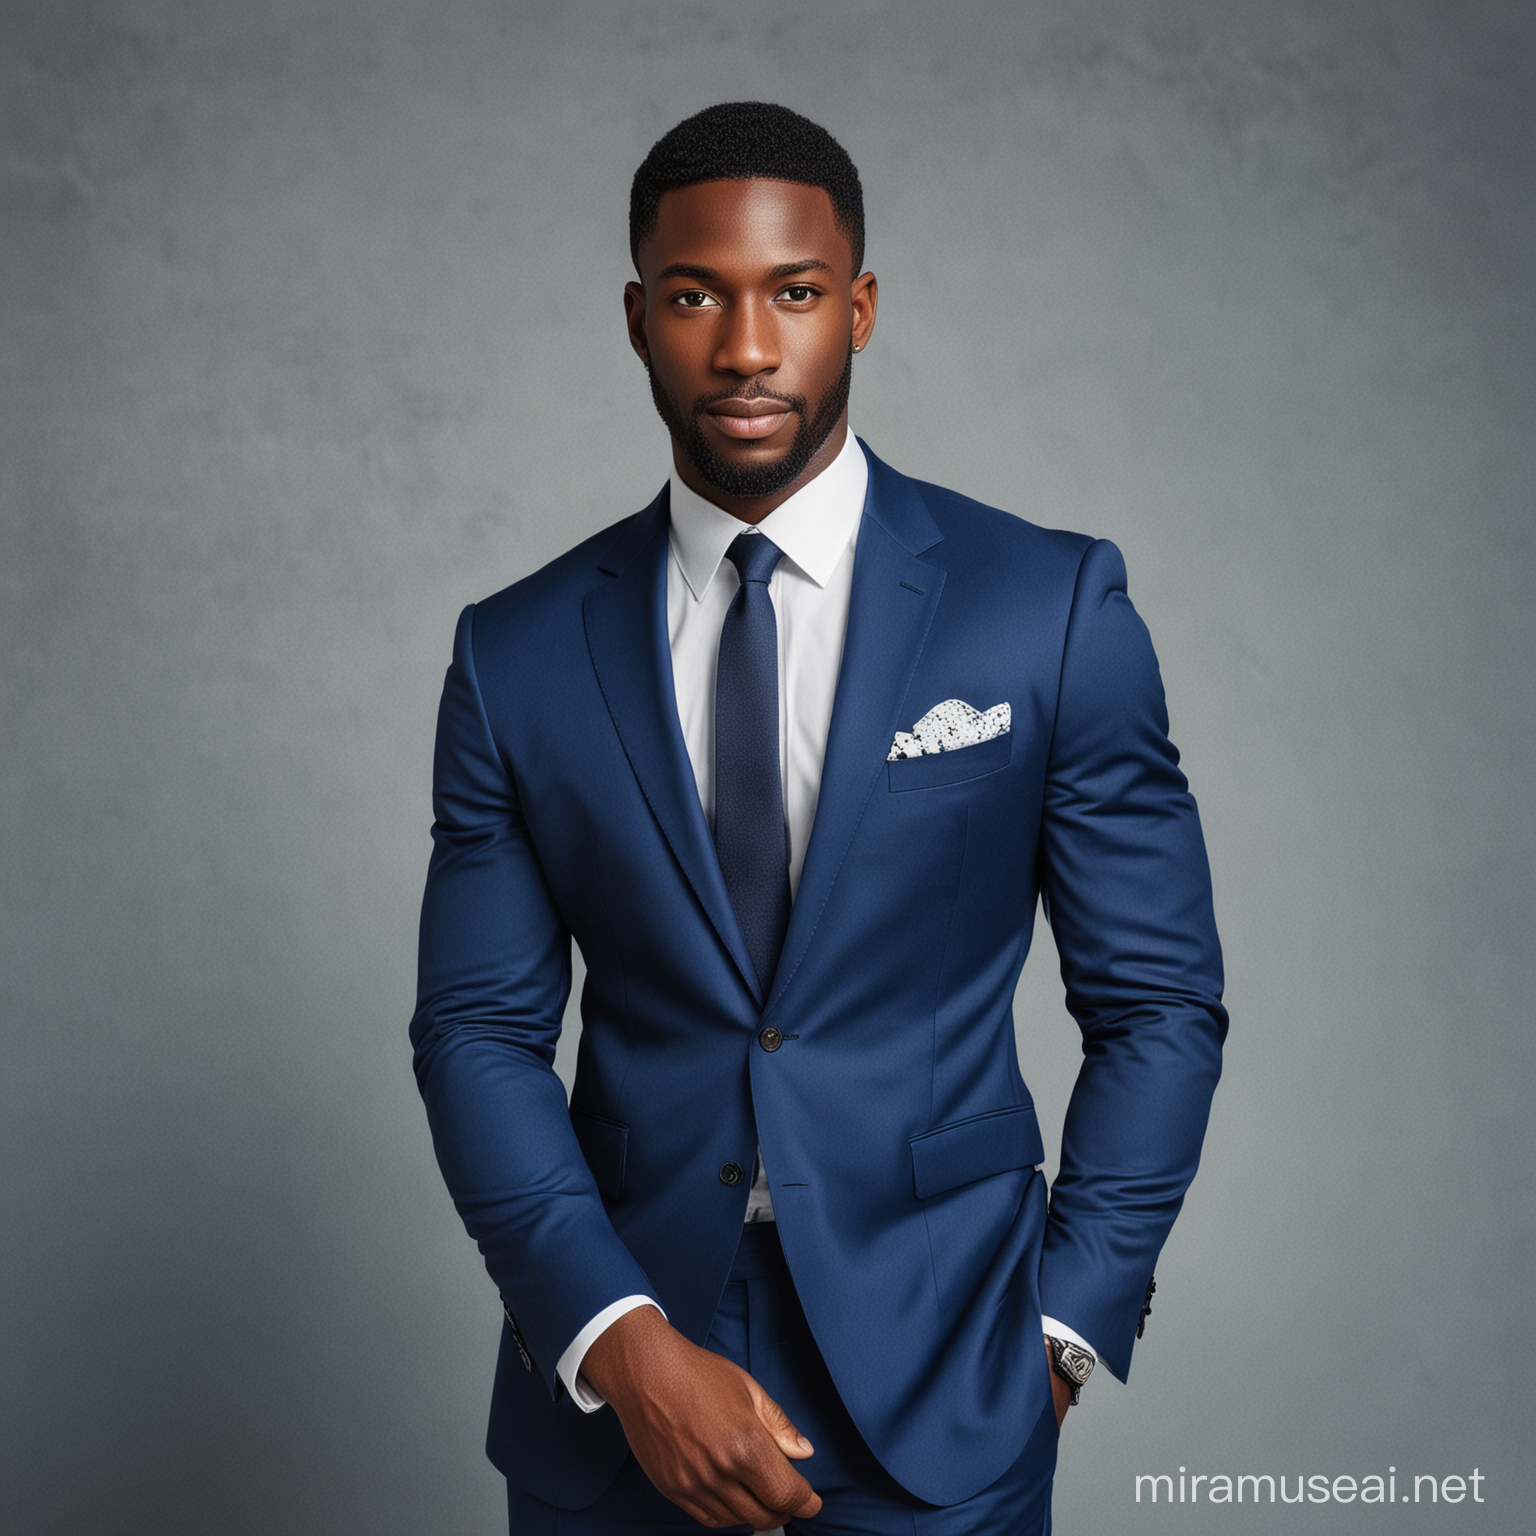 black man in blue suit